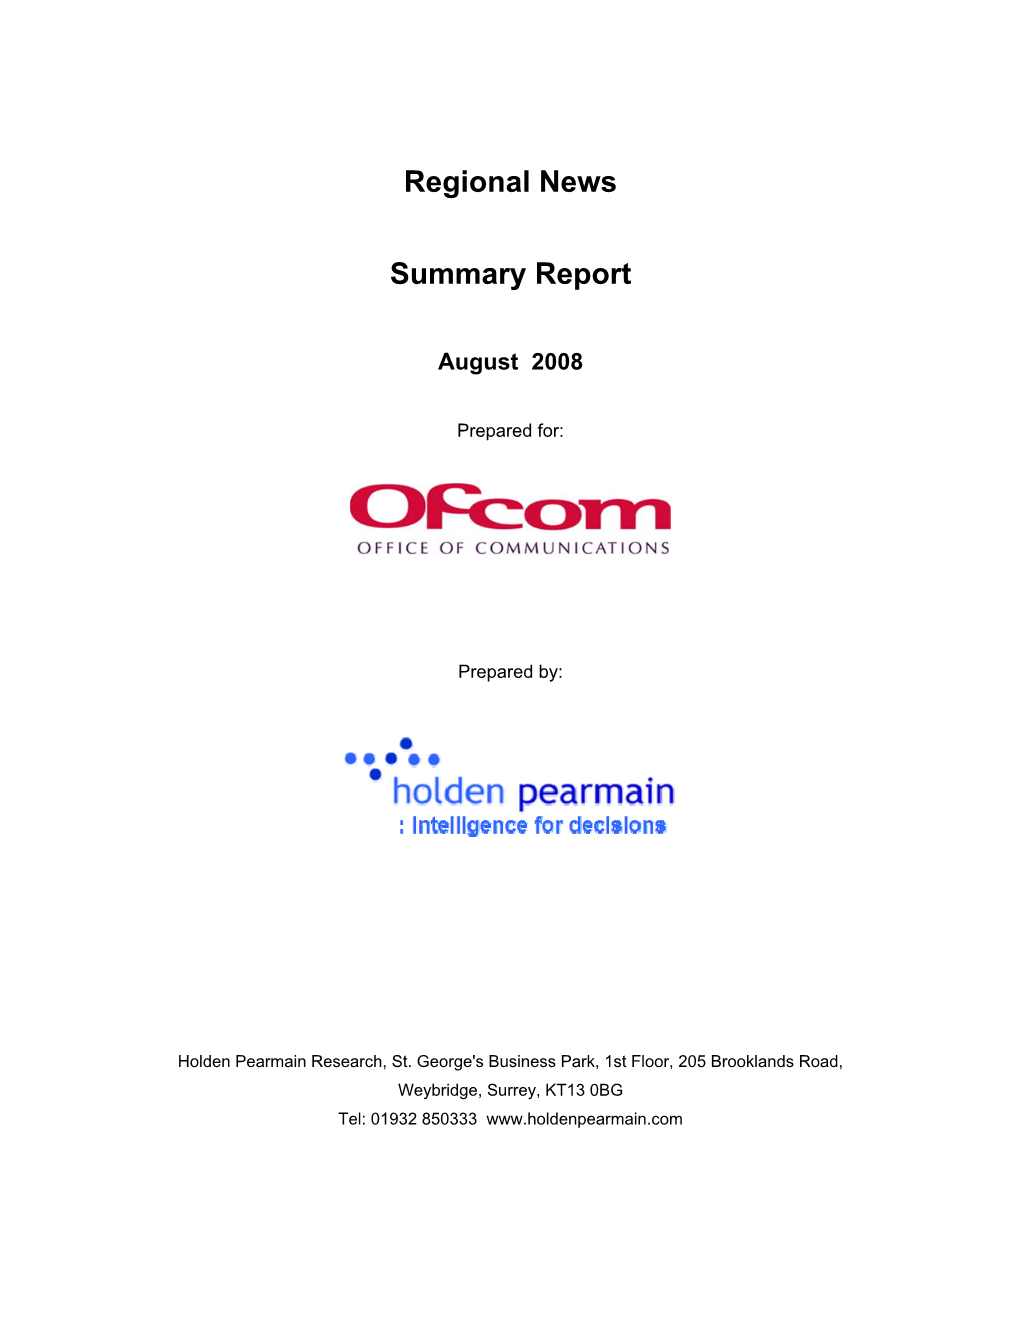 Annex 16: Regional News Summary Report